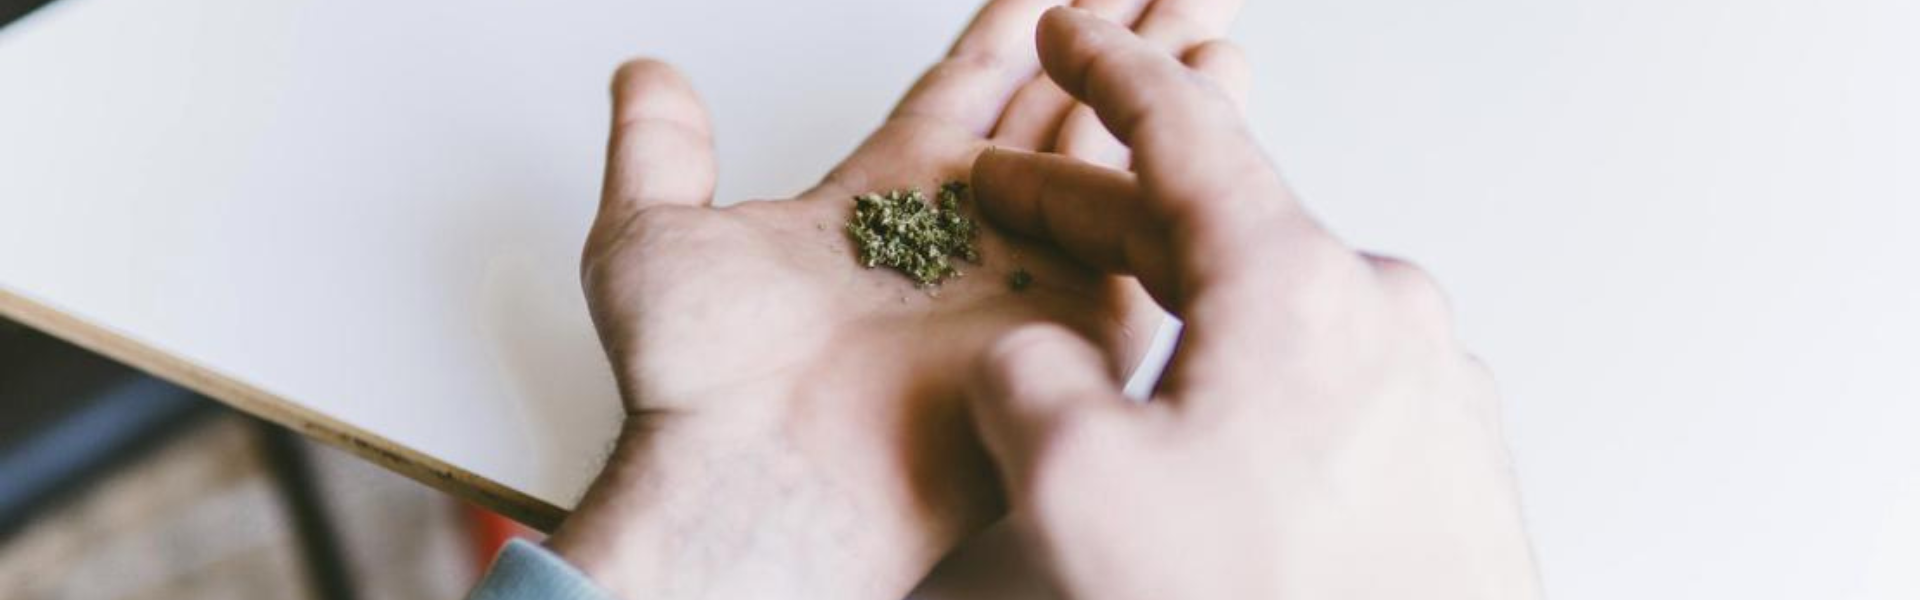 Photo of a hand holding some marijuana